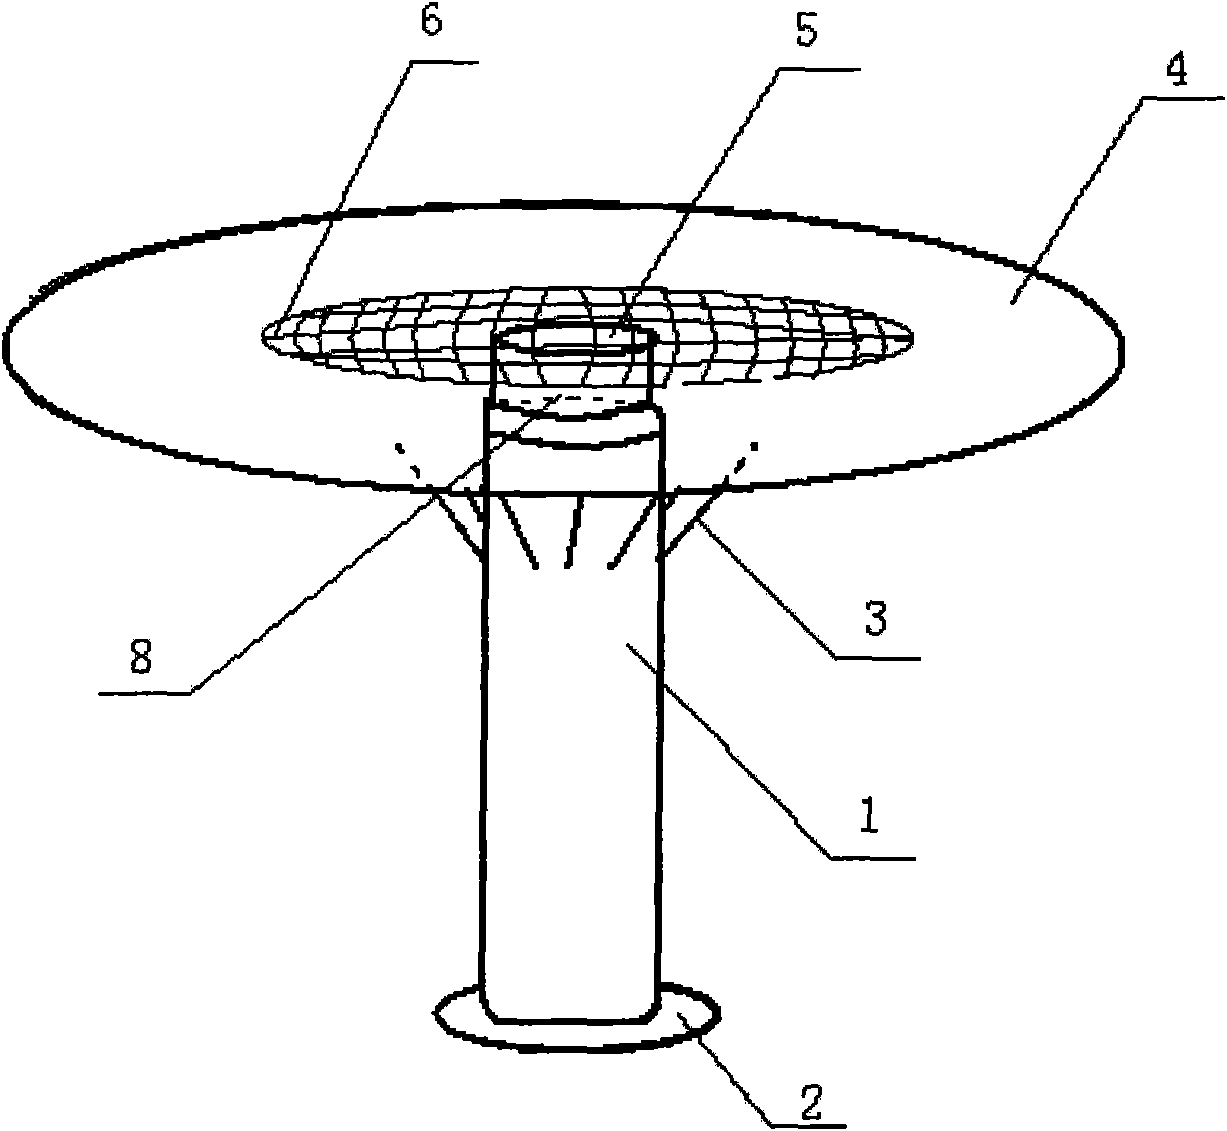 Telescopic rotary dining table